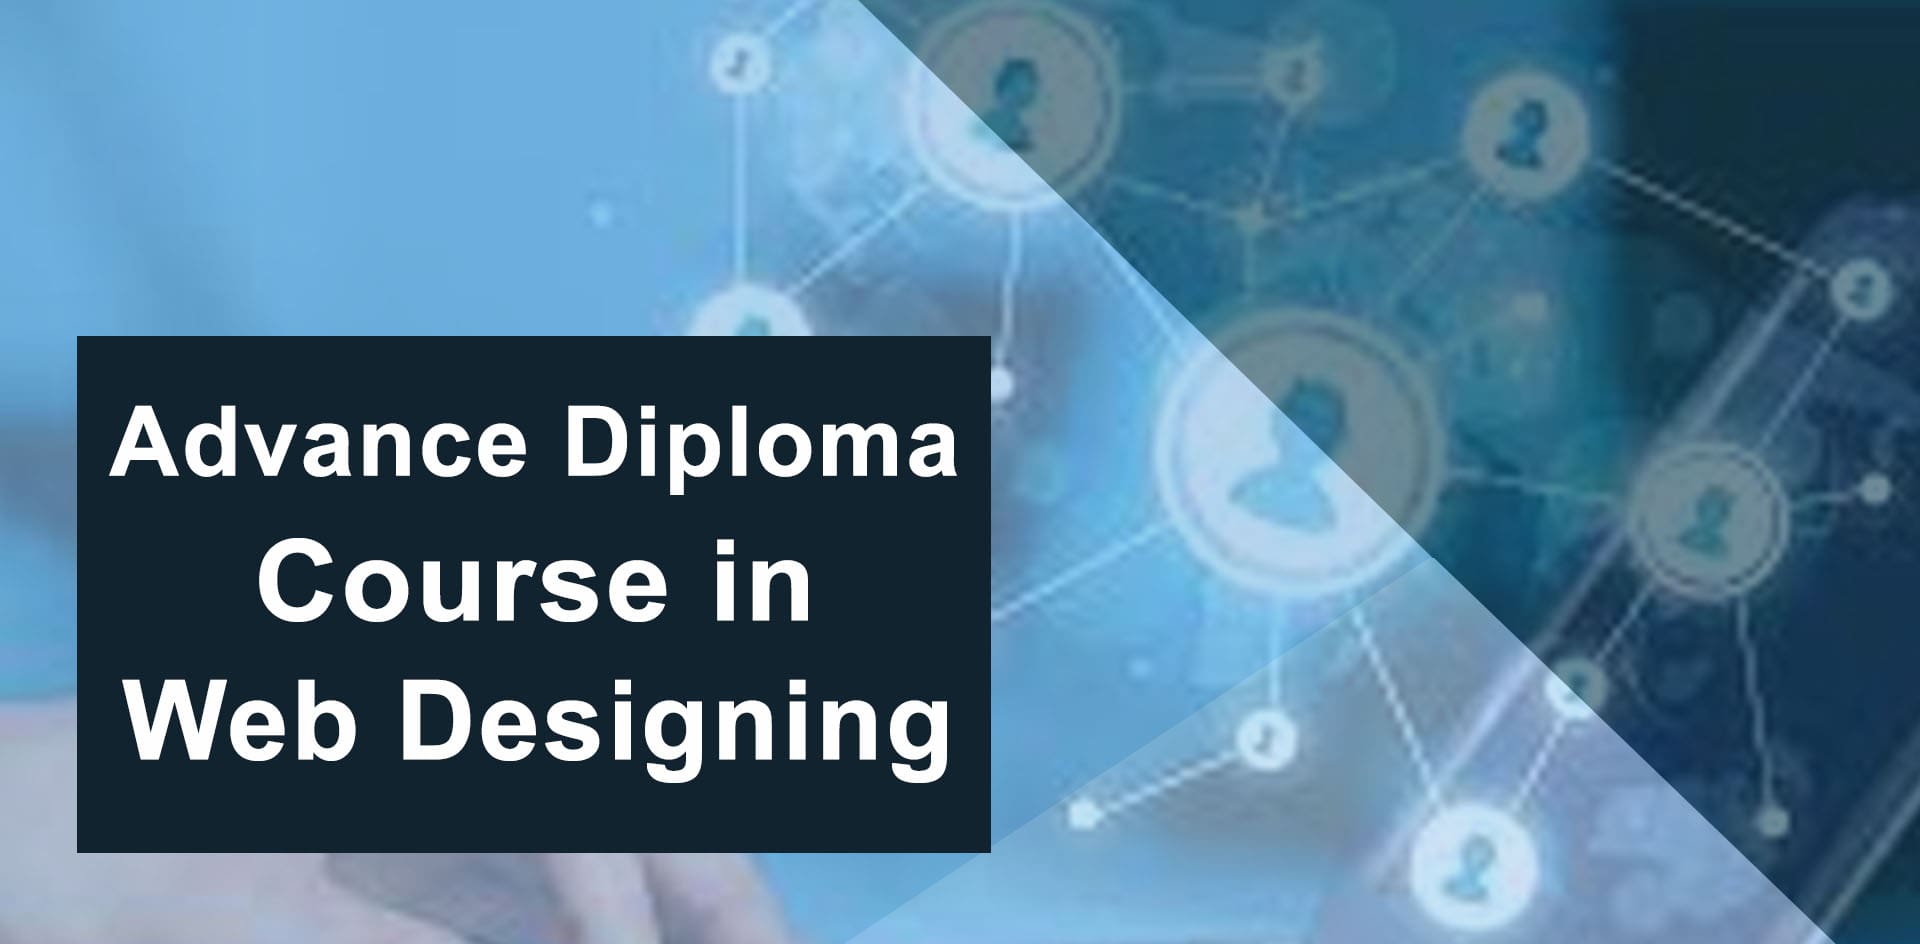 Advanced Diploma Course in Web Design, Development & Internet Marketing